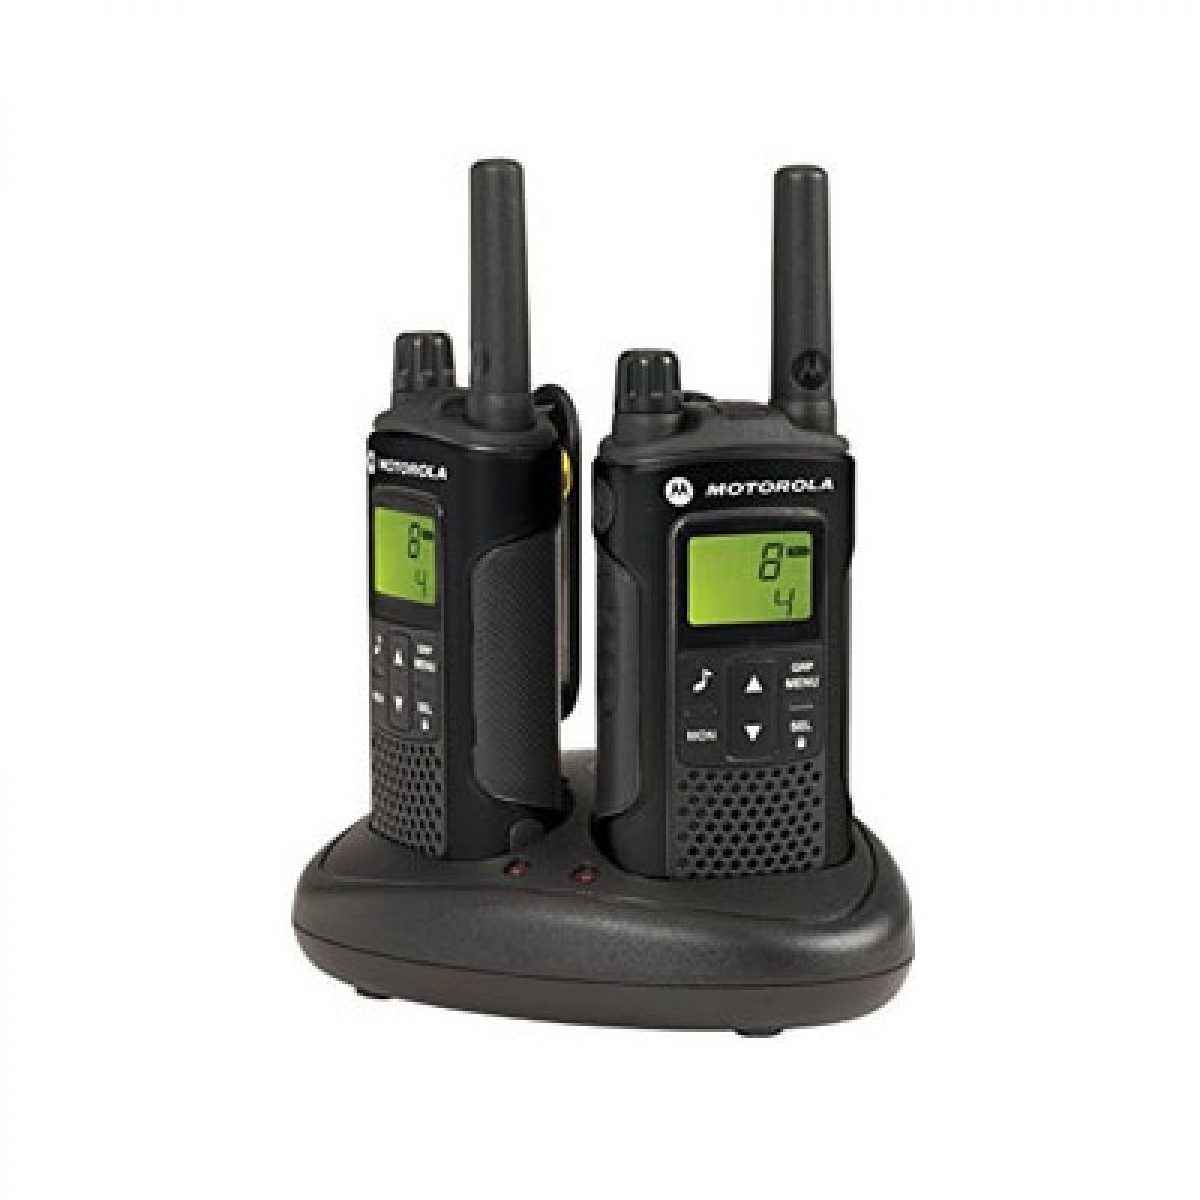 Talkie walkie / Radio Motorola au meilleur prix au Maroc chez